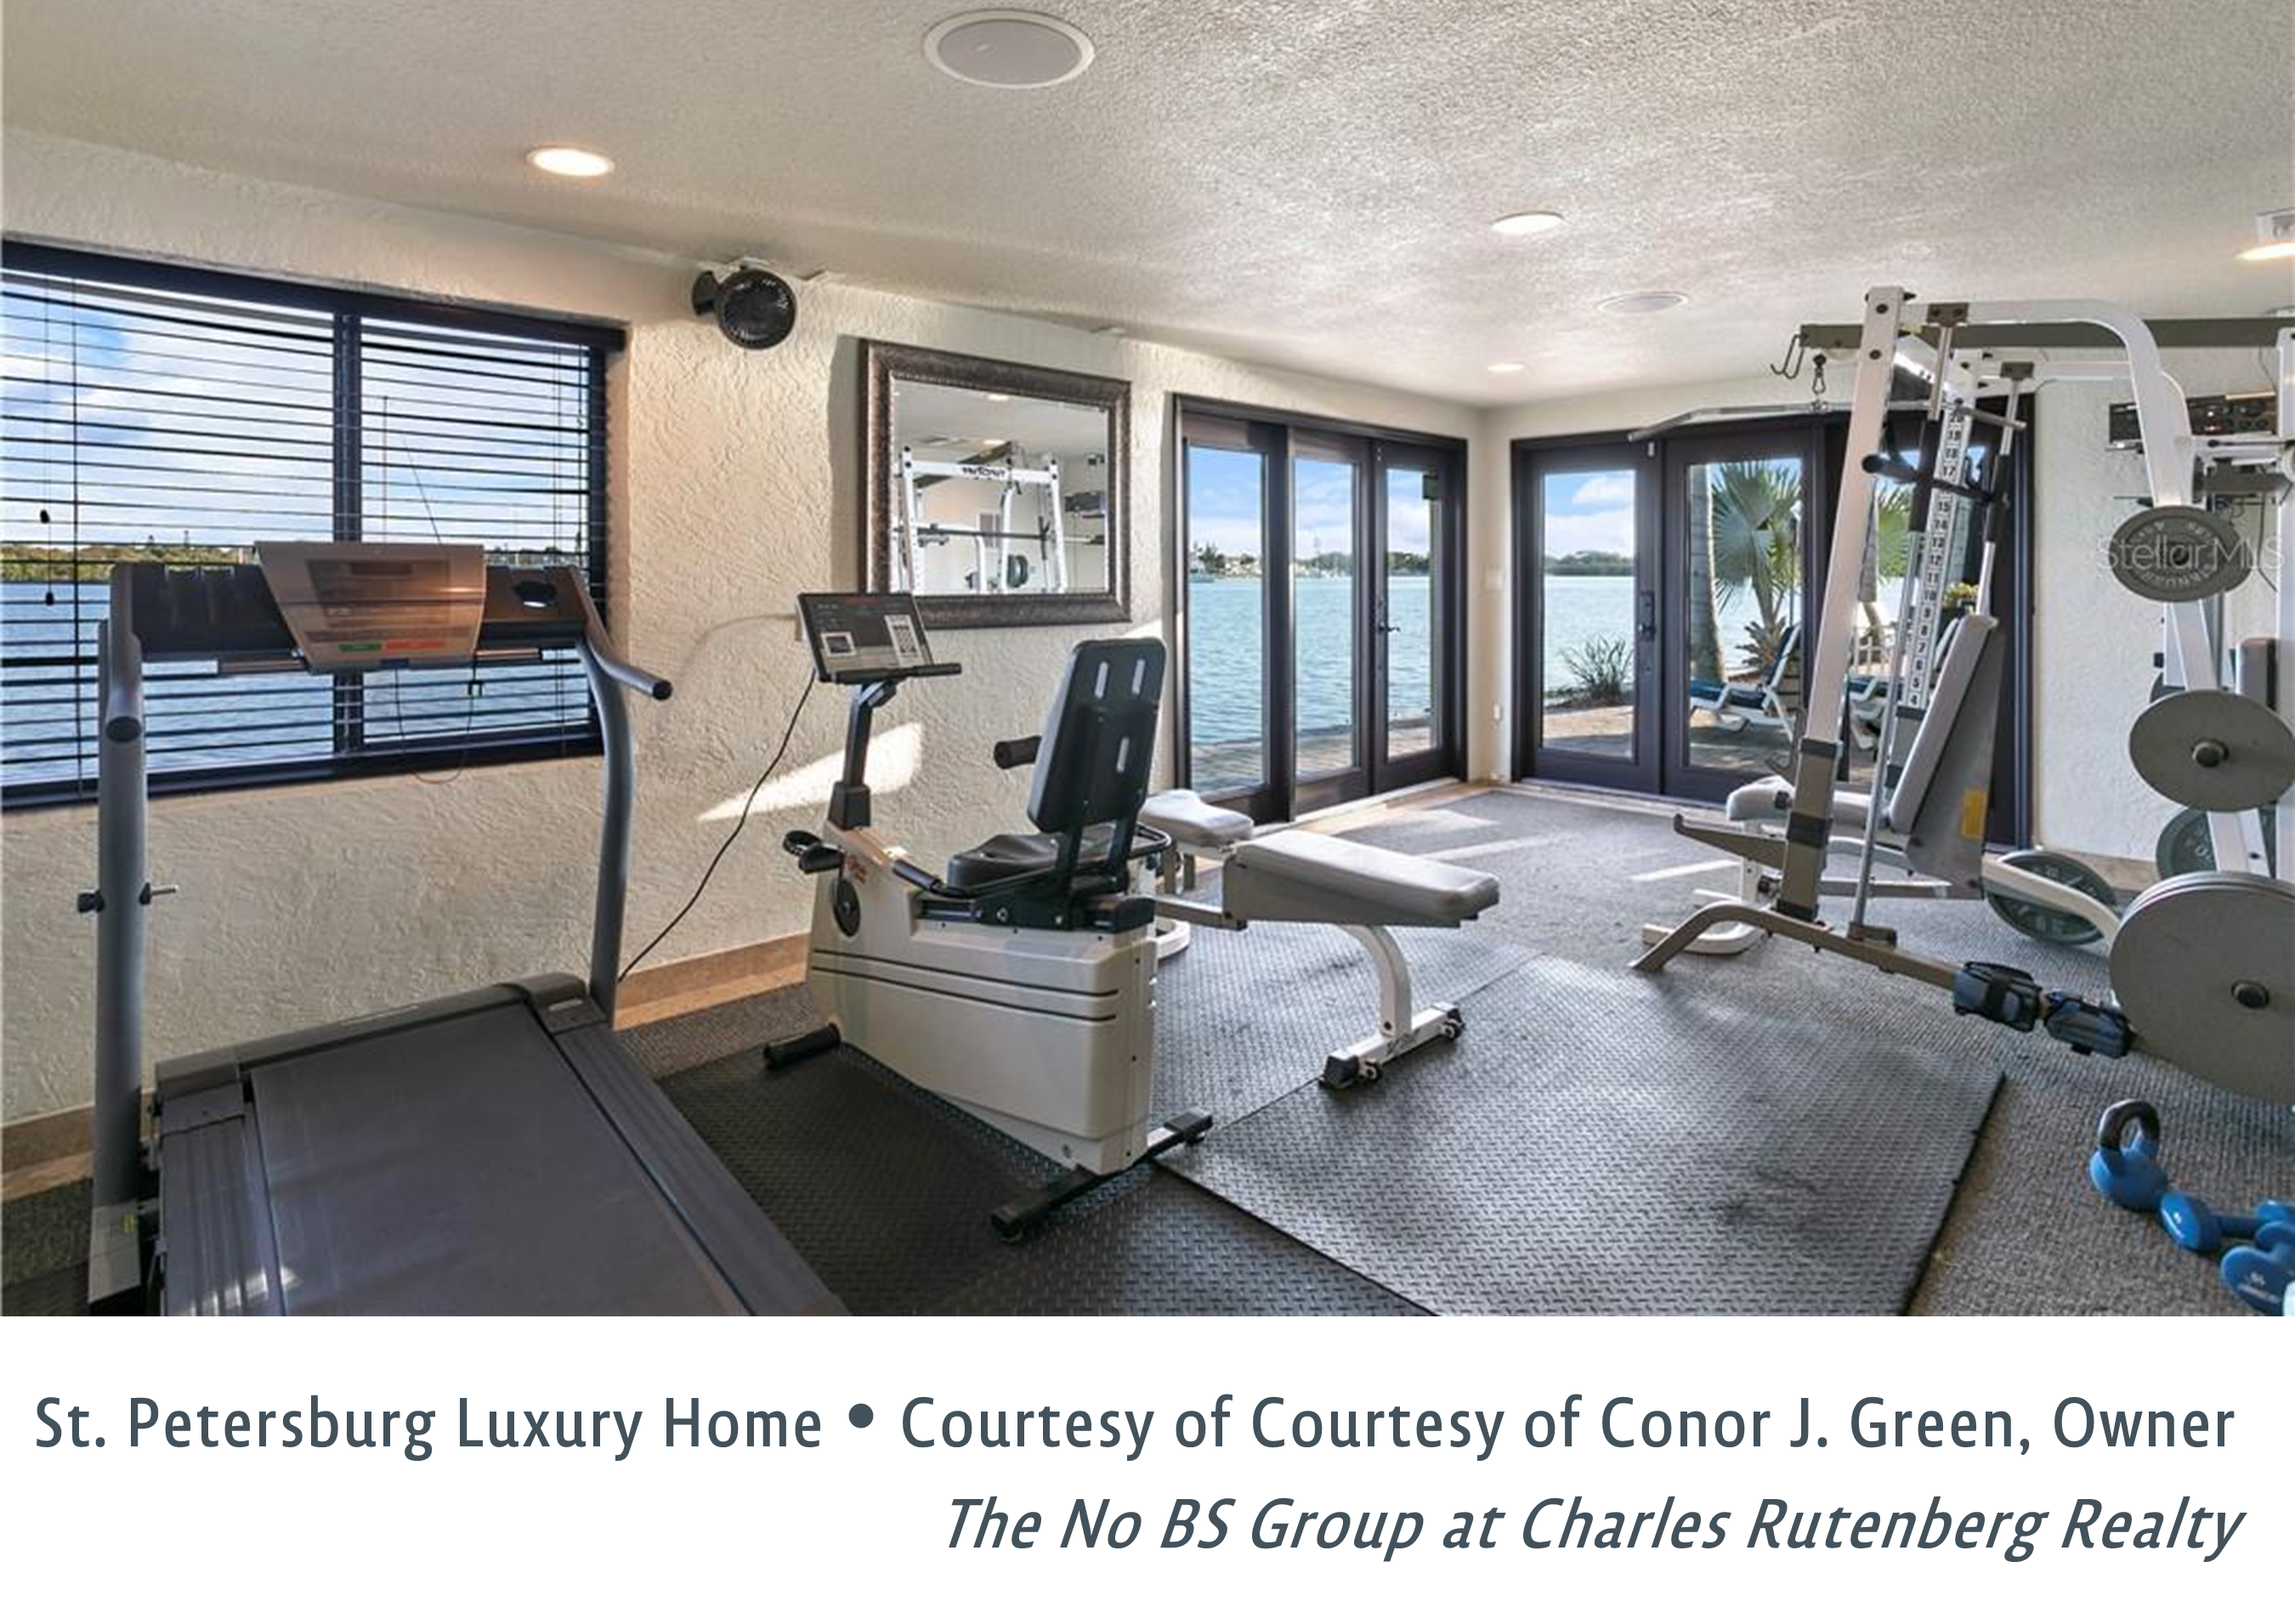 luxury home exercise room